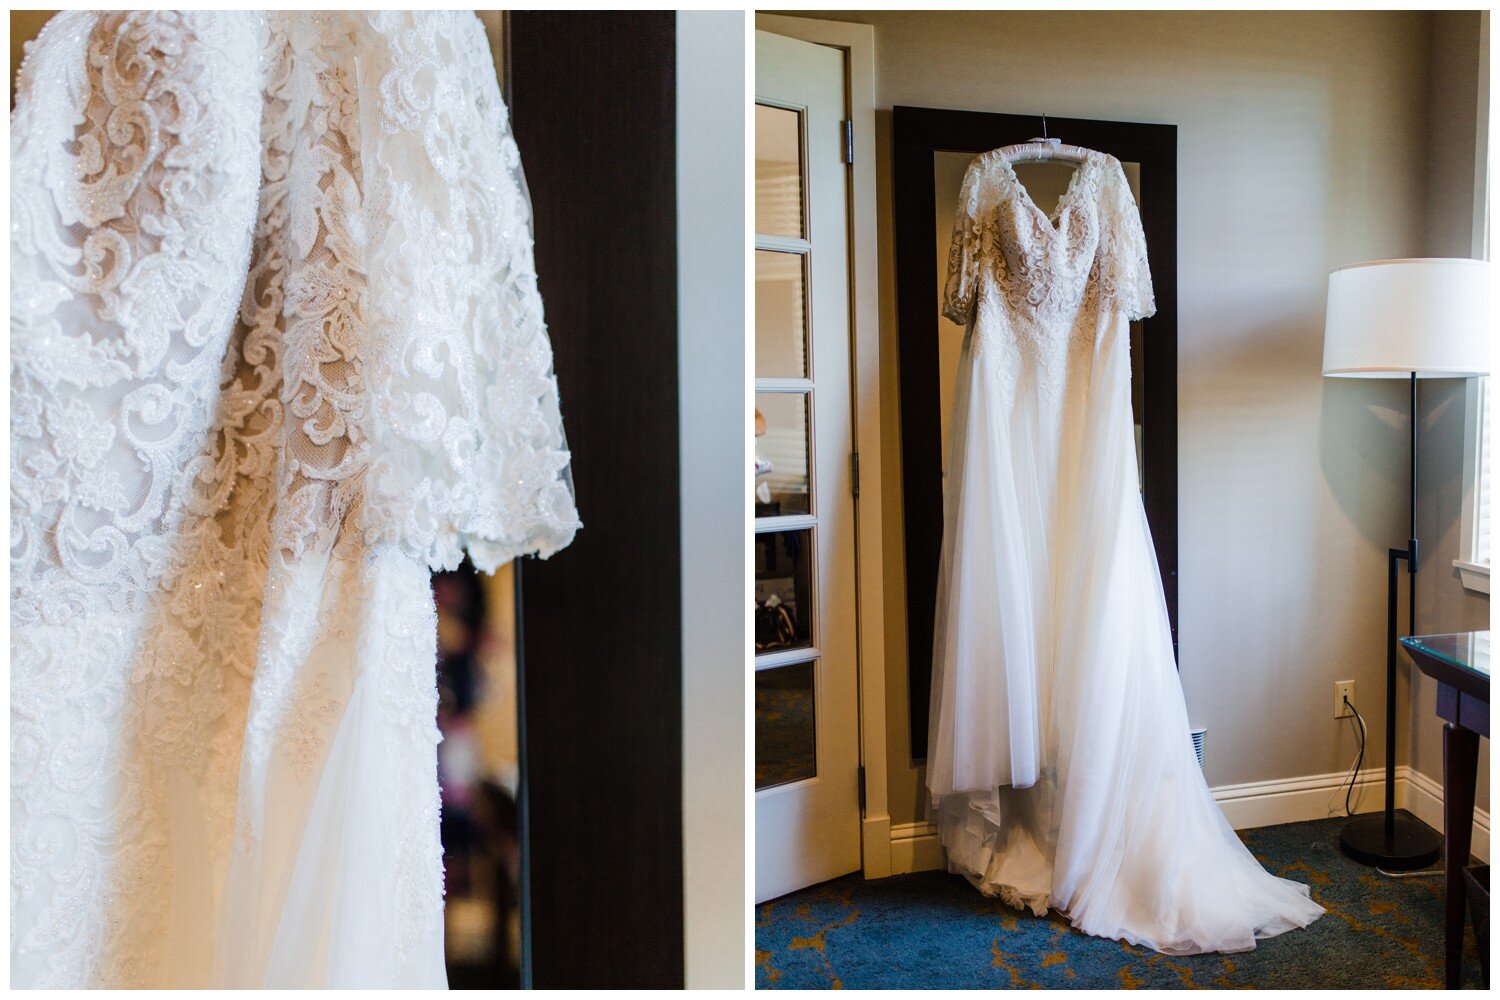 The bride's Pronovias wedding dress at Alderbrook Resort